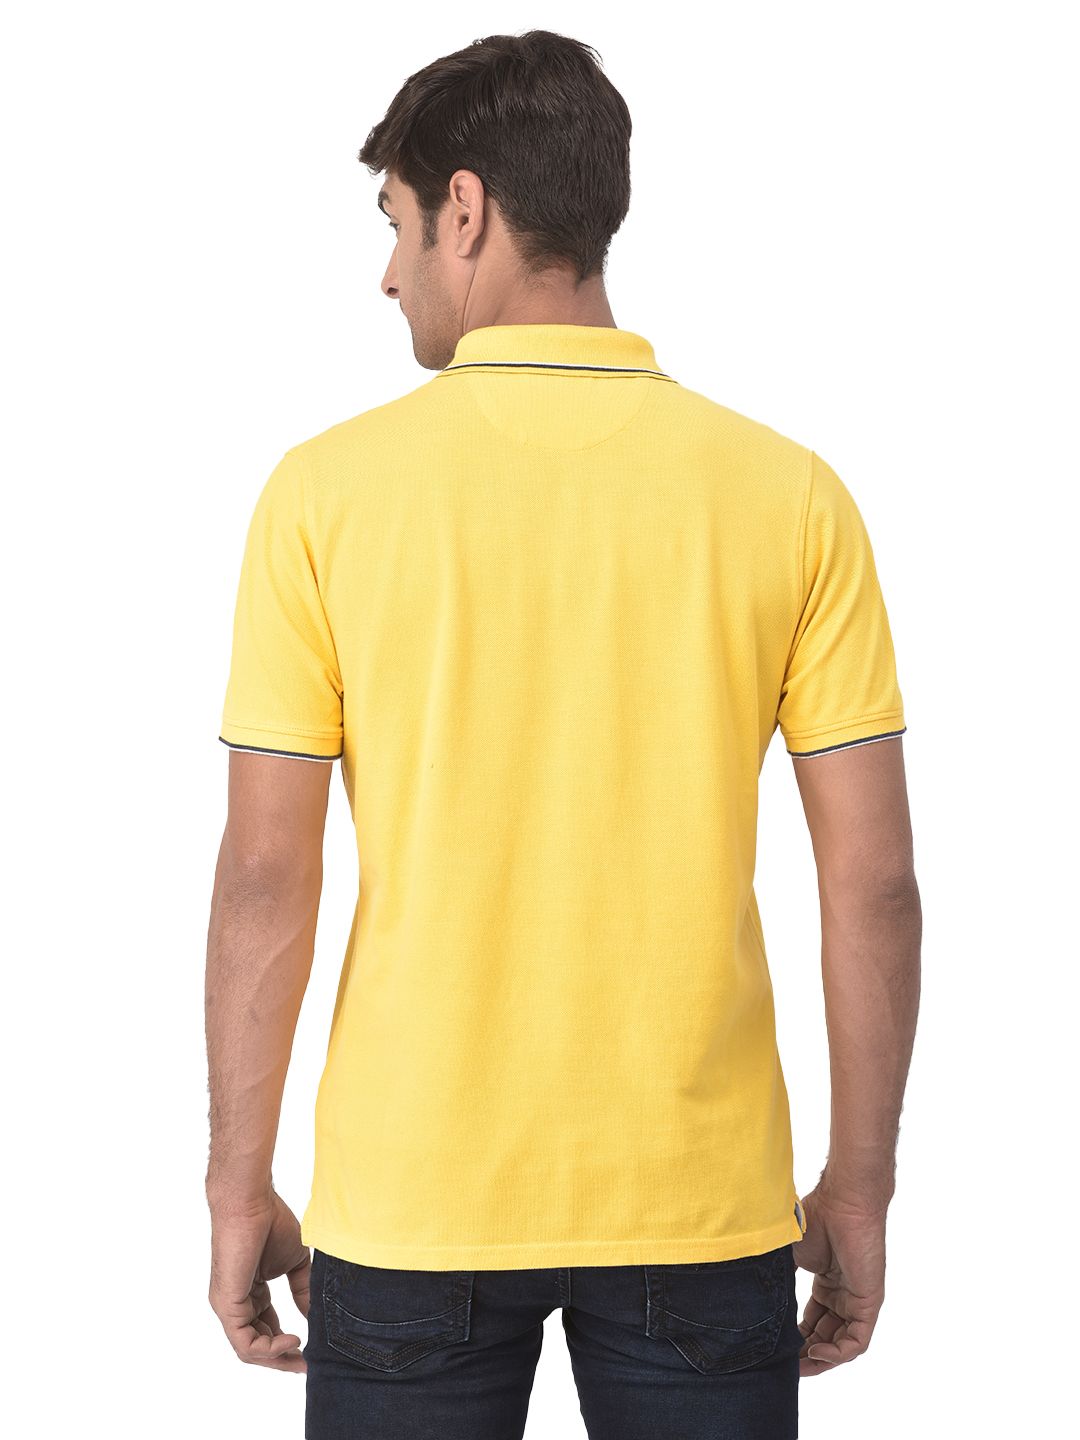 Yellow polo t-shirt